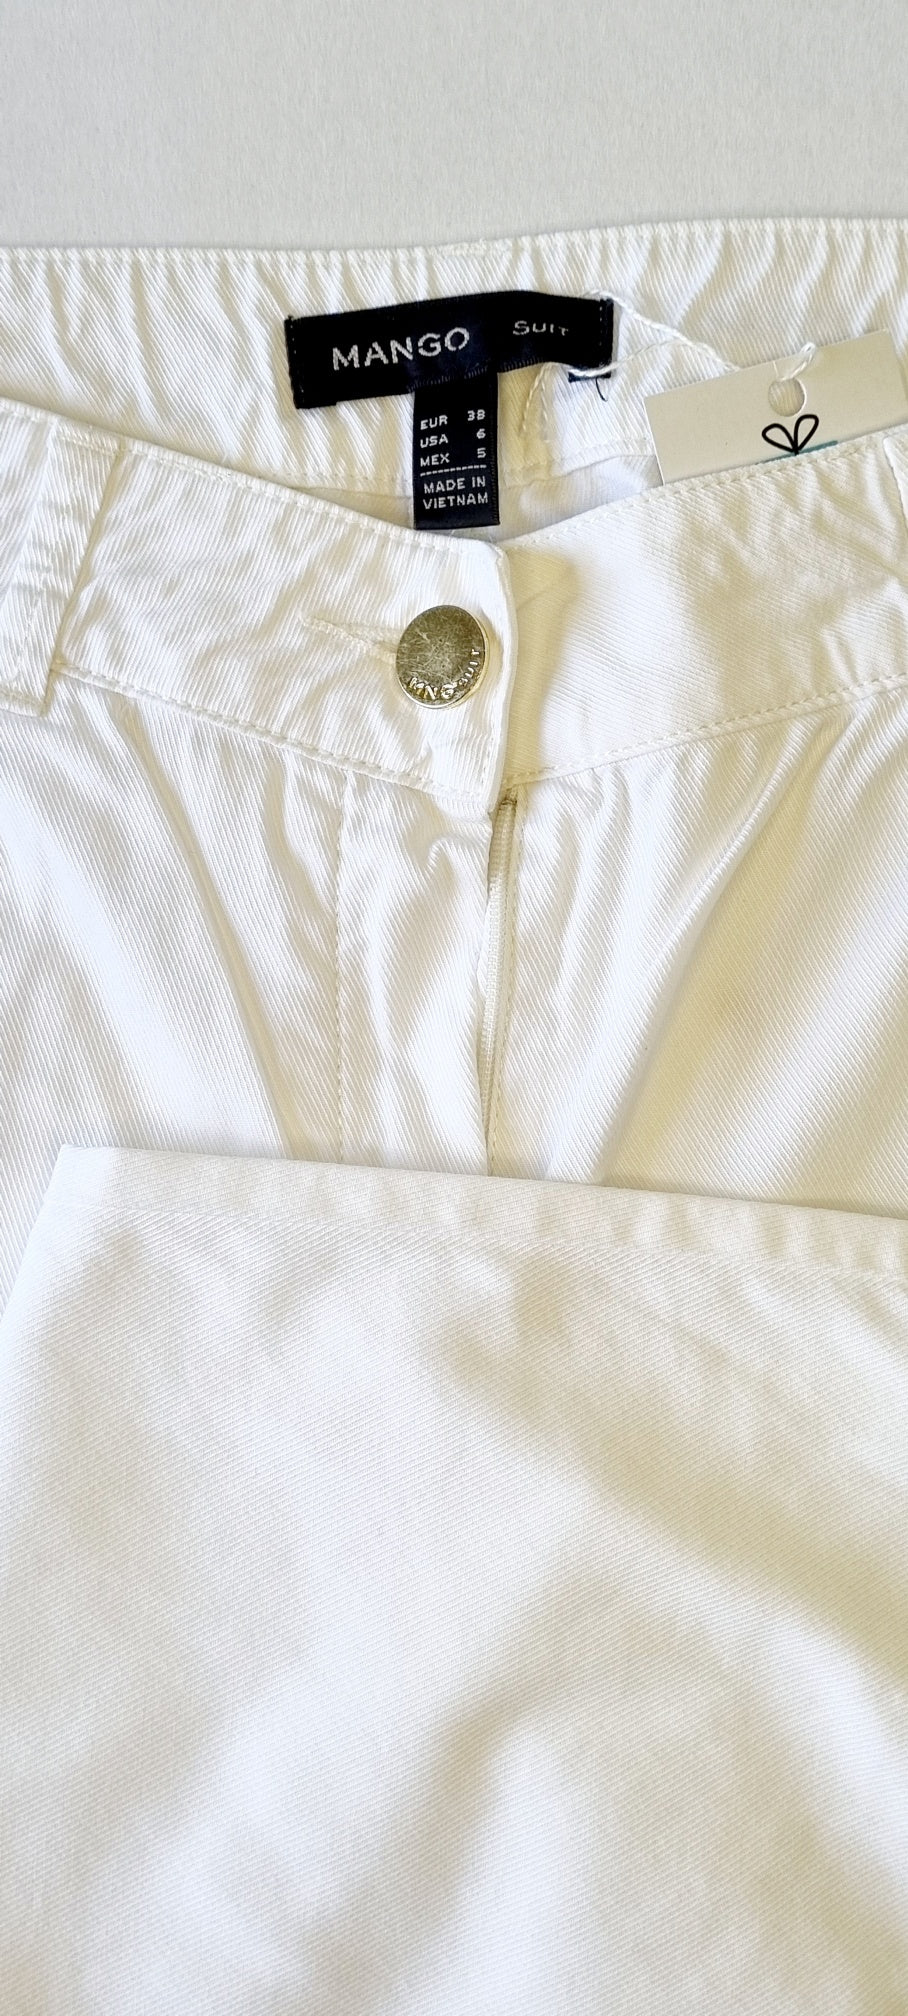 Mango Suit - White relaxed fit suit denim